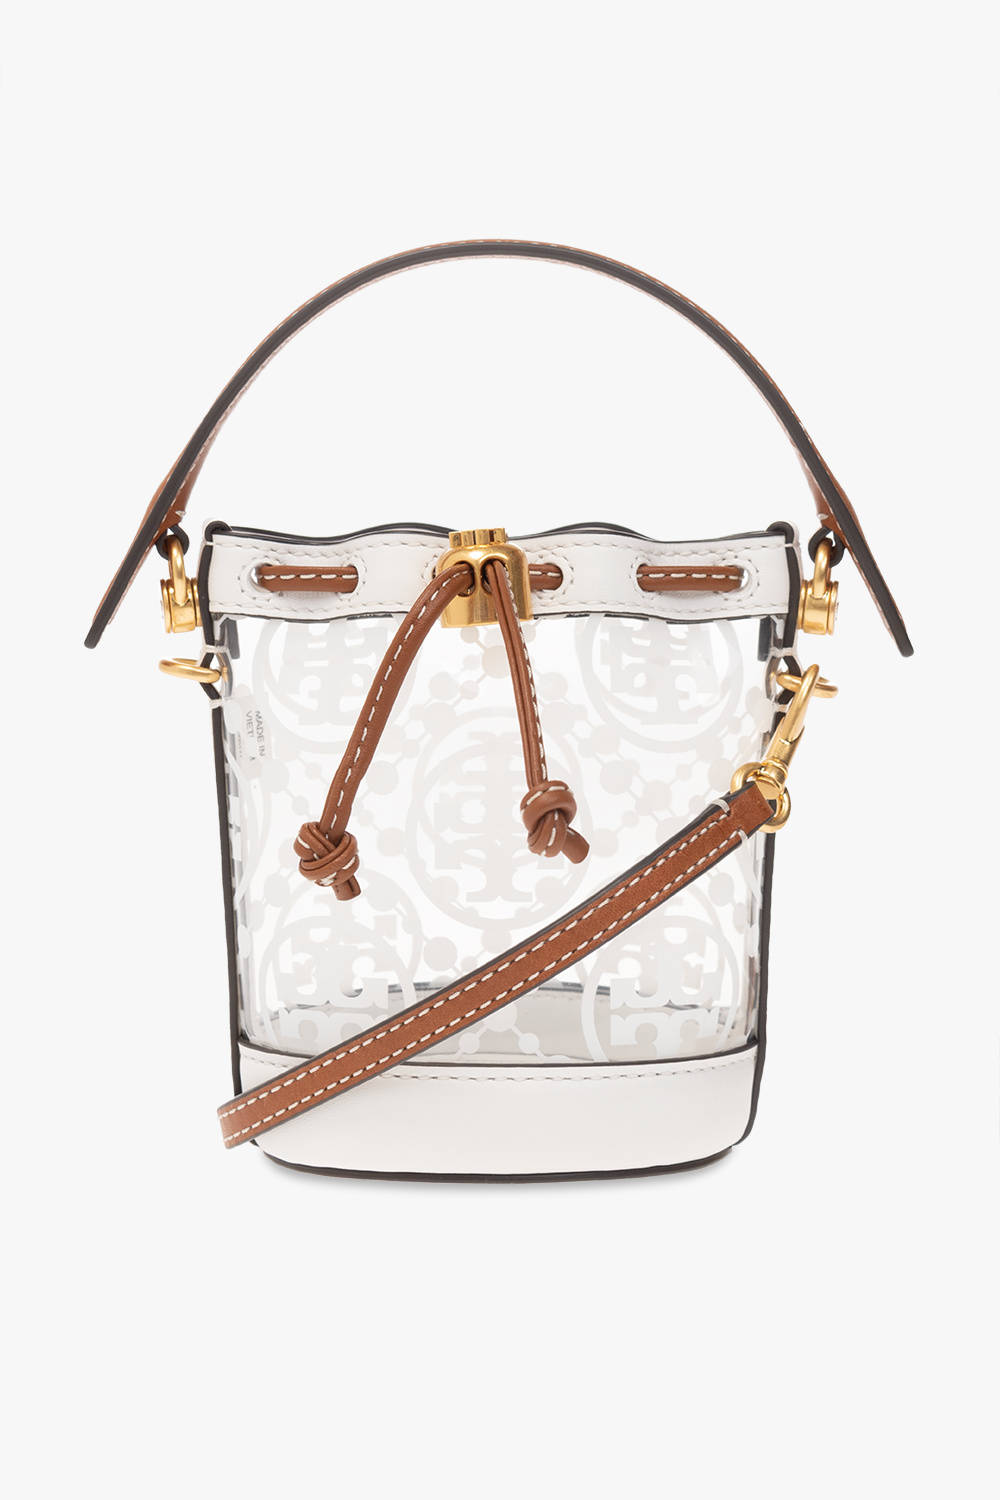 Designer Inspired Luxury Bucket Shaped Handbag / Crossbody - Brown Monogram